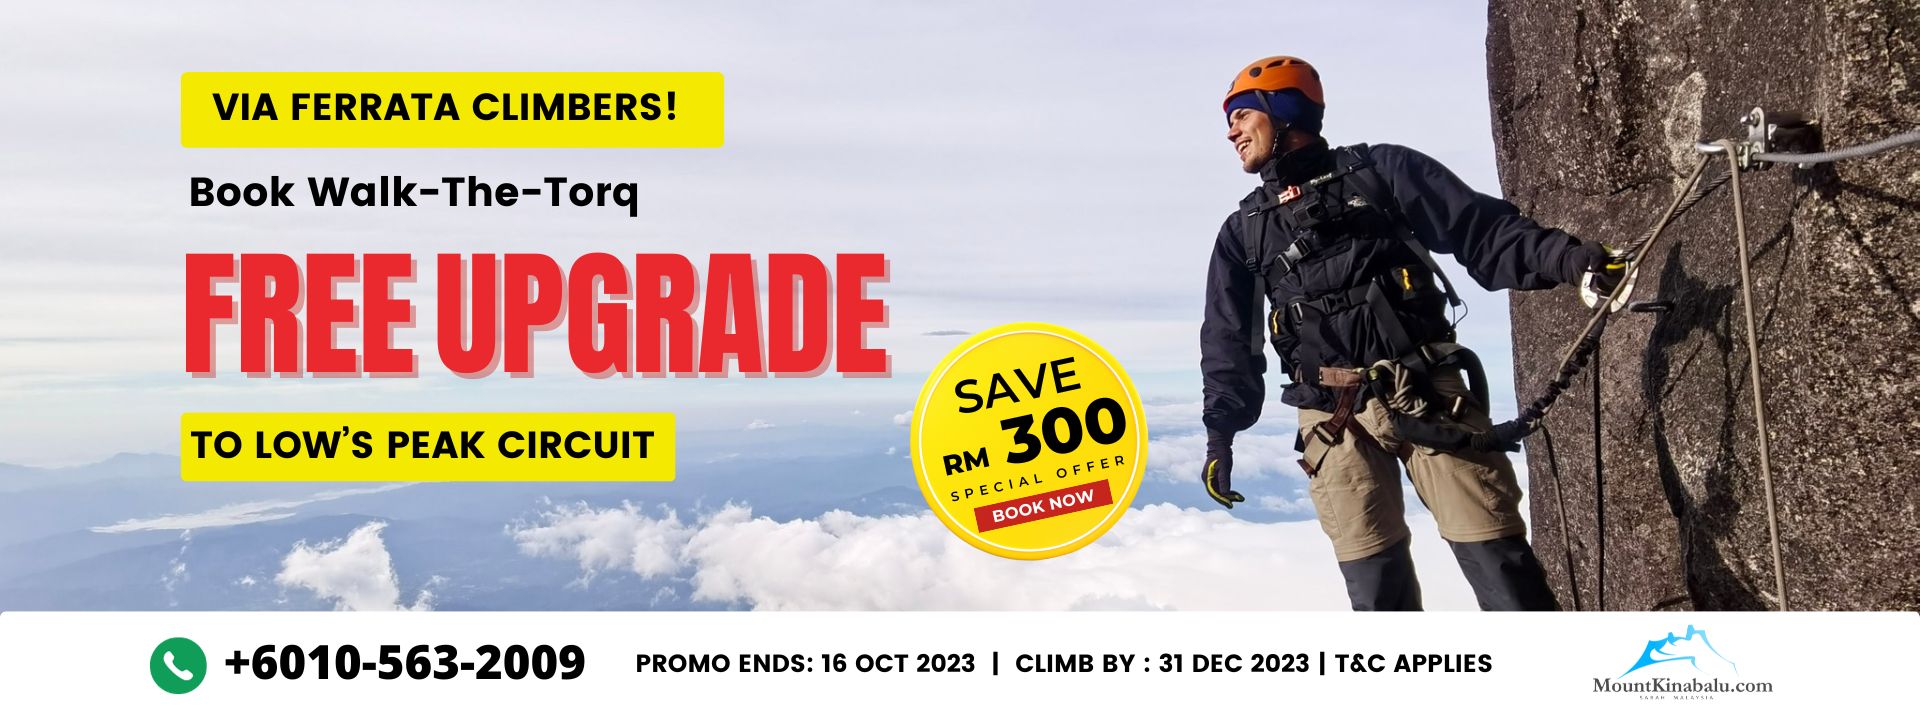 Mount Kinabalu Climb with Via Ferrata (Walk The Torq) Amazing Promo Deal 2023